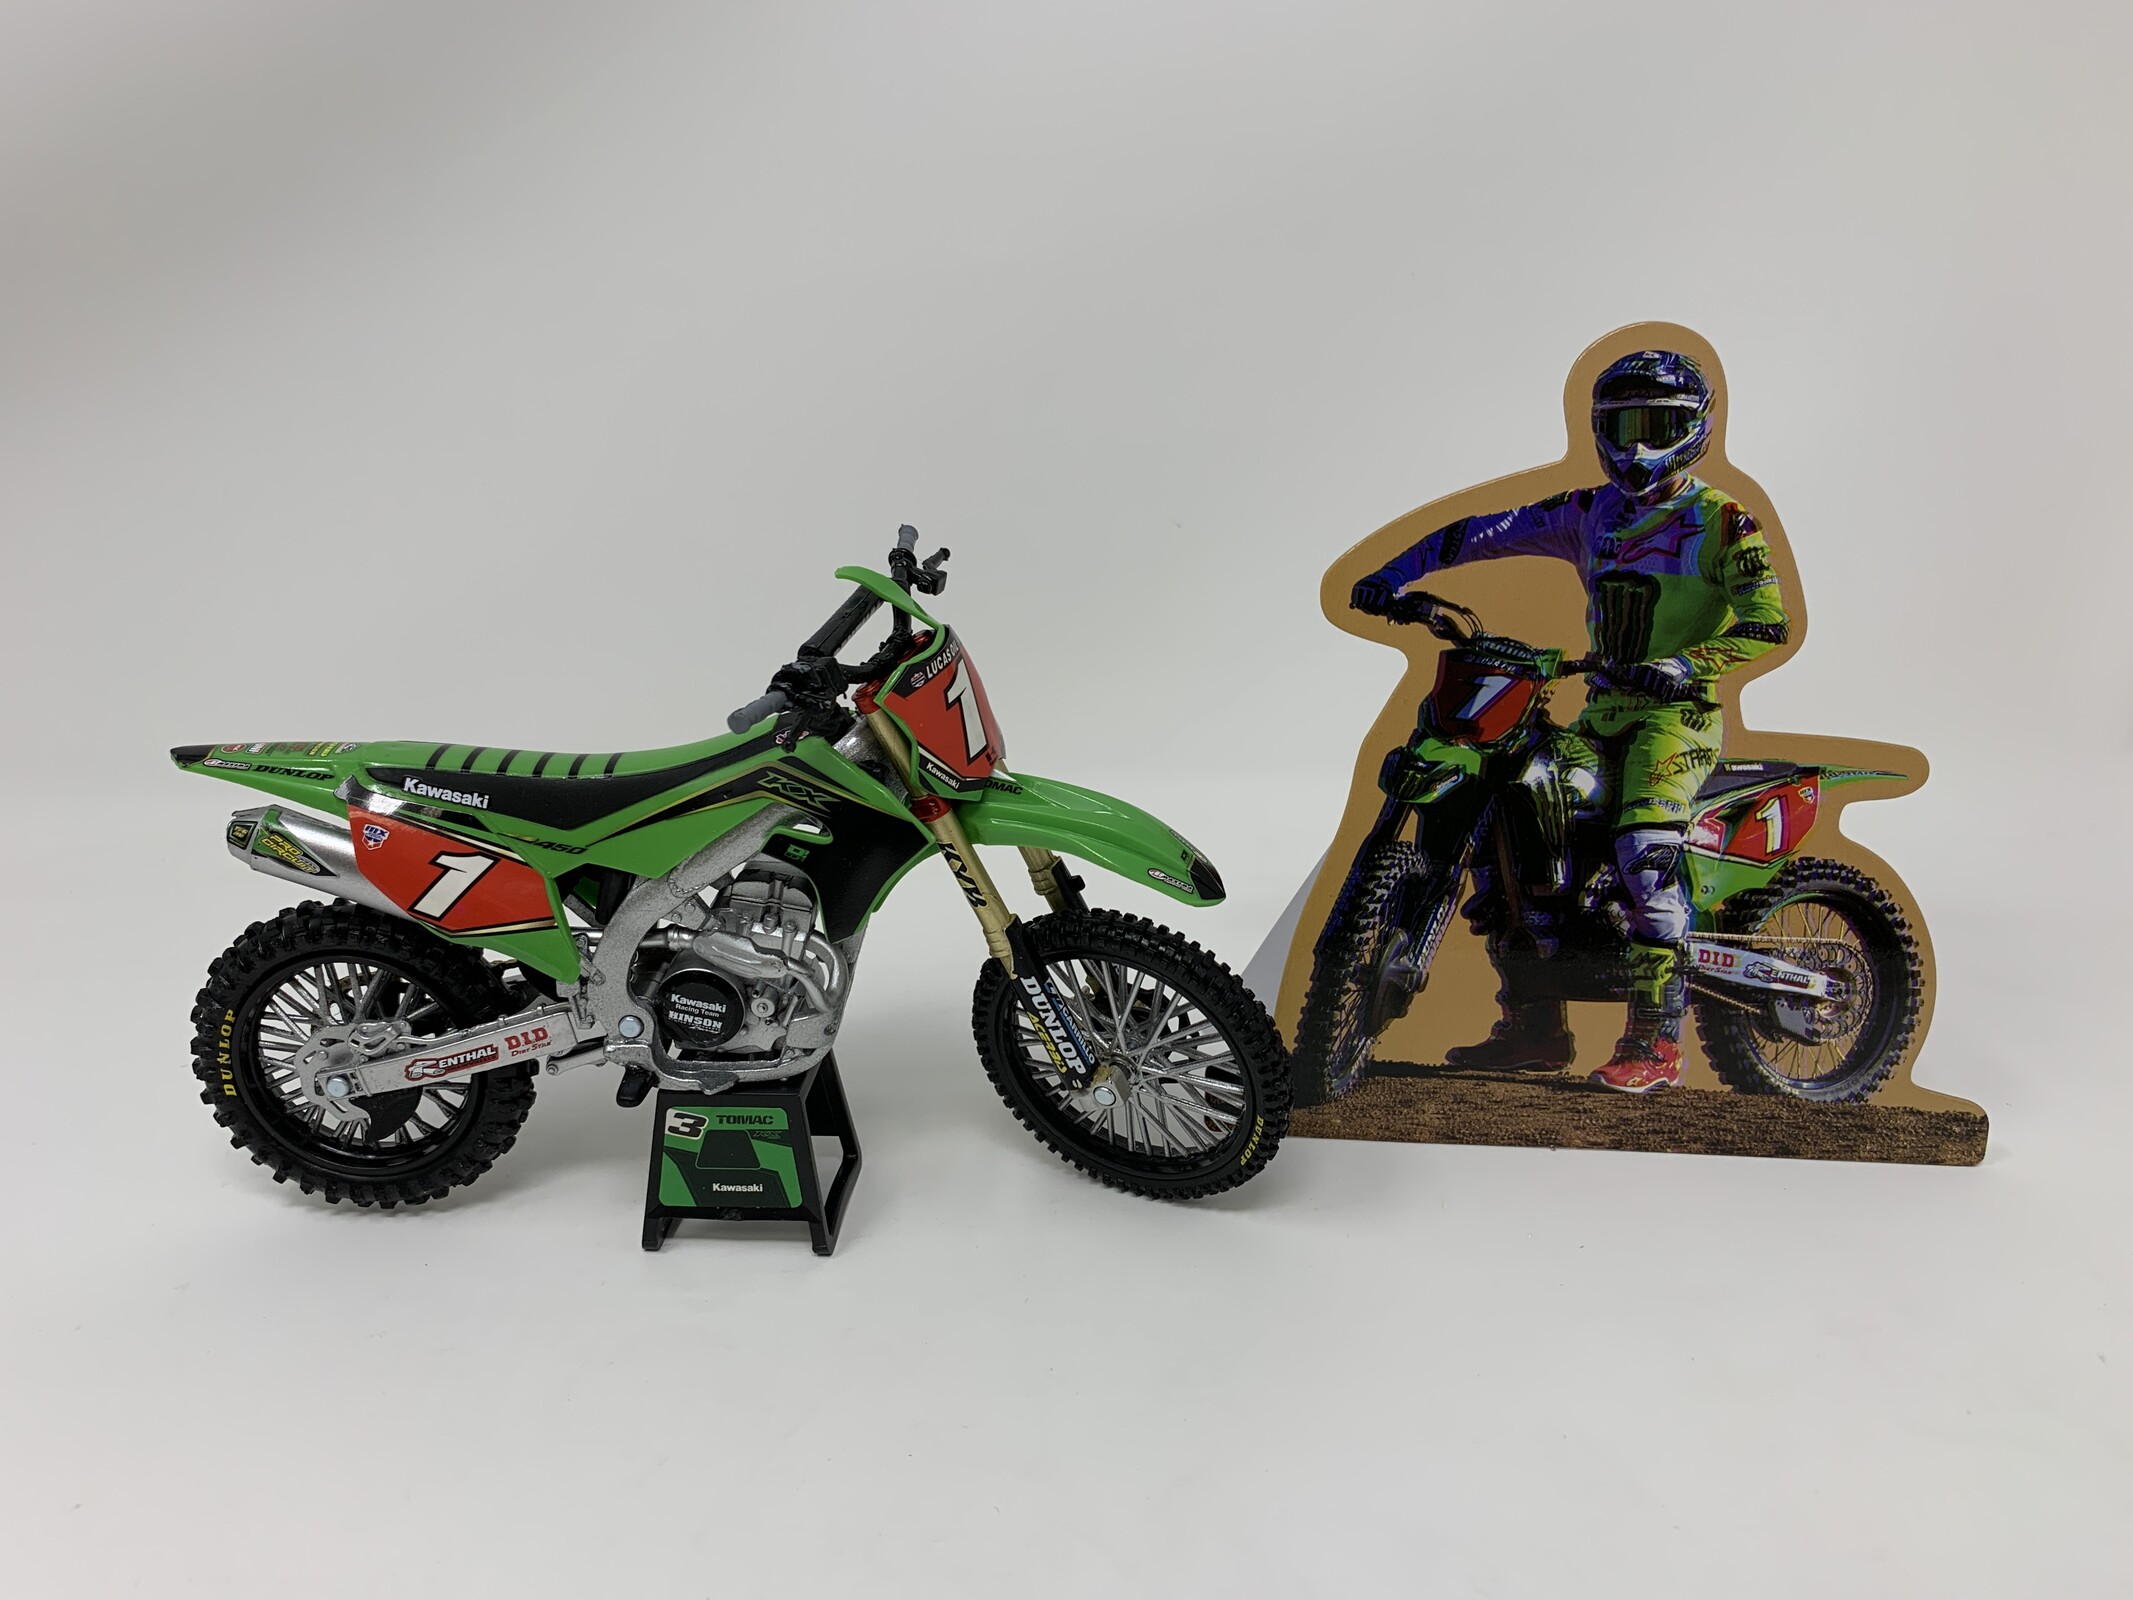 New Ray Model Motorcycles